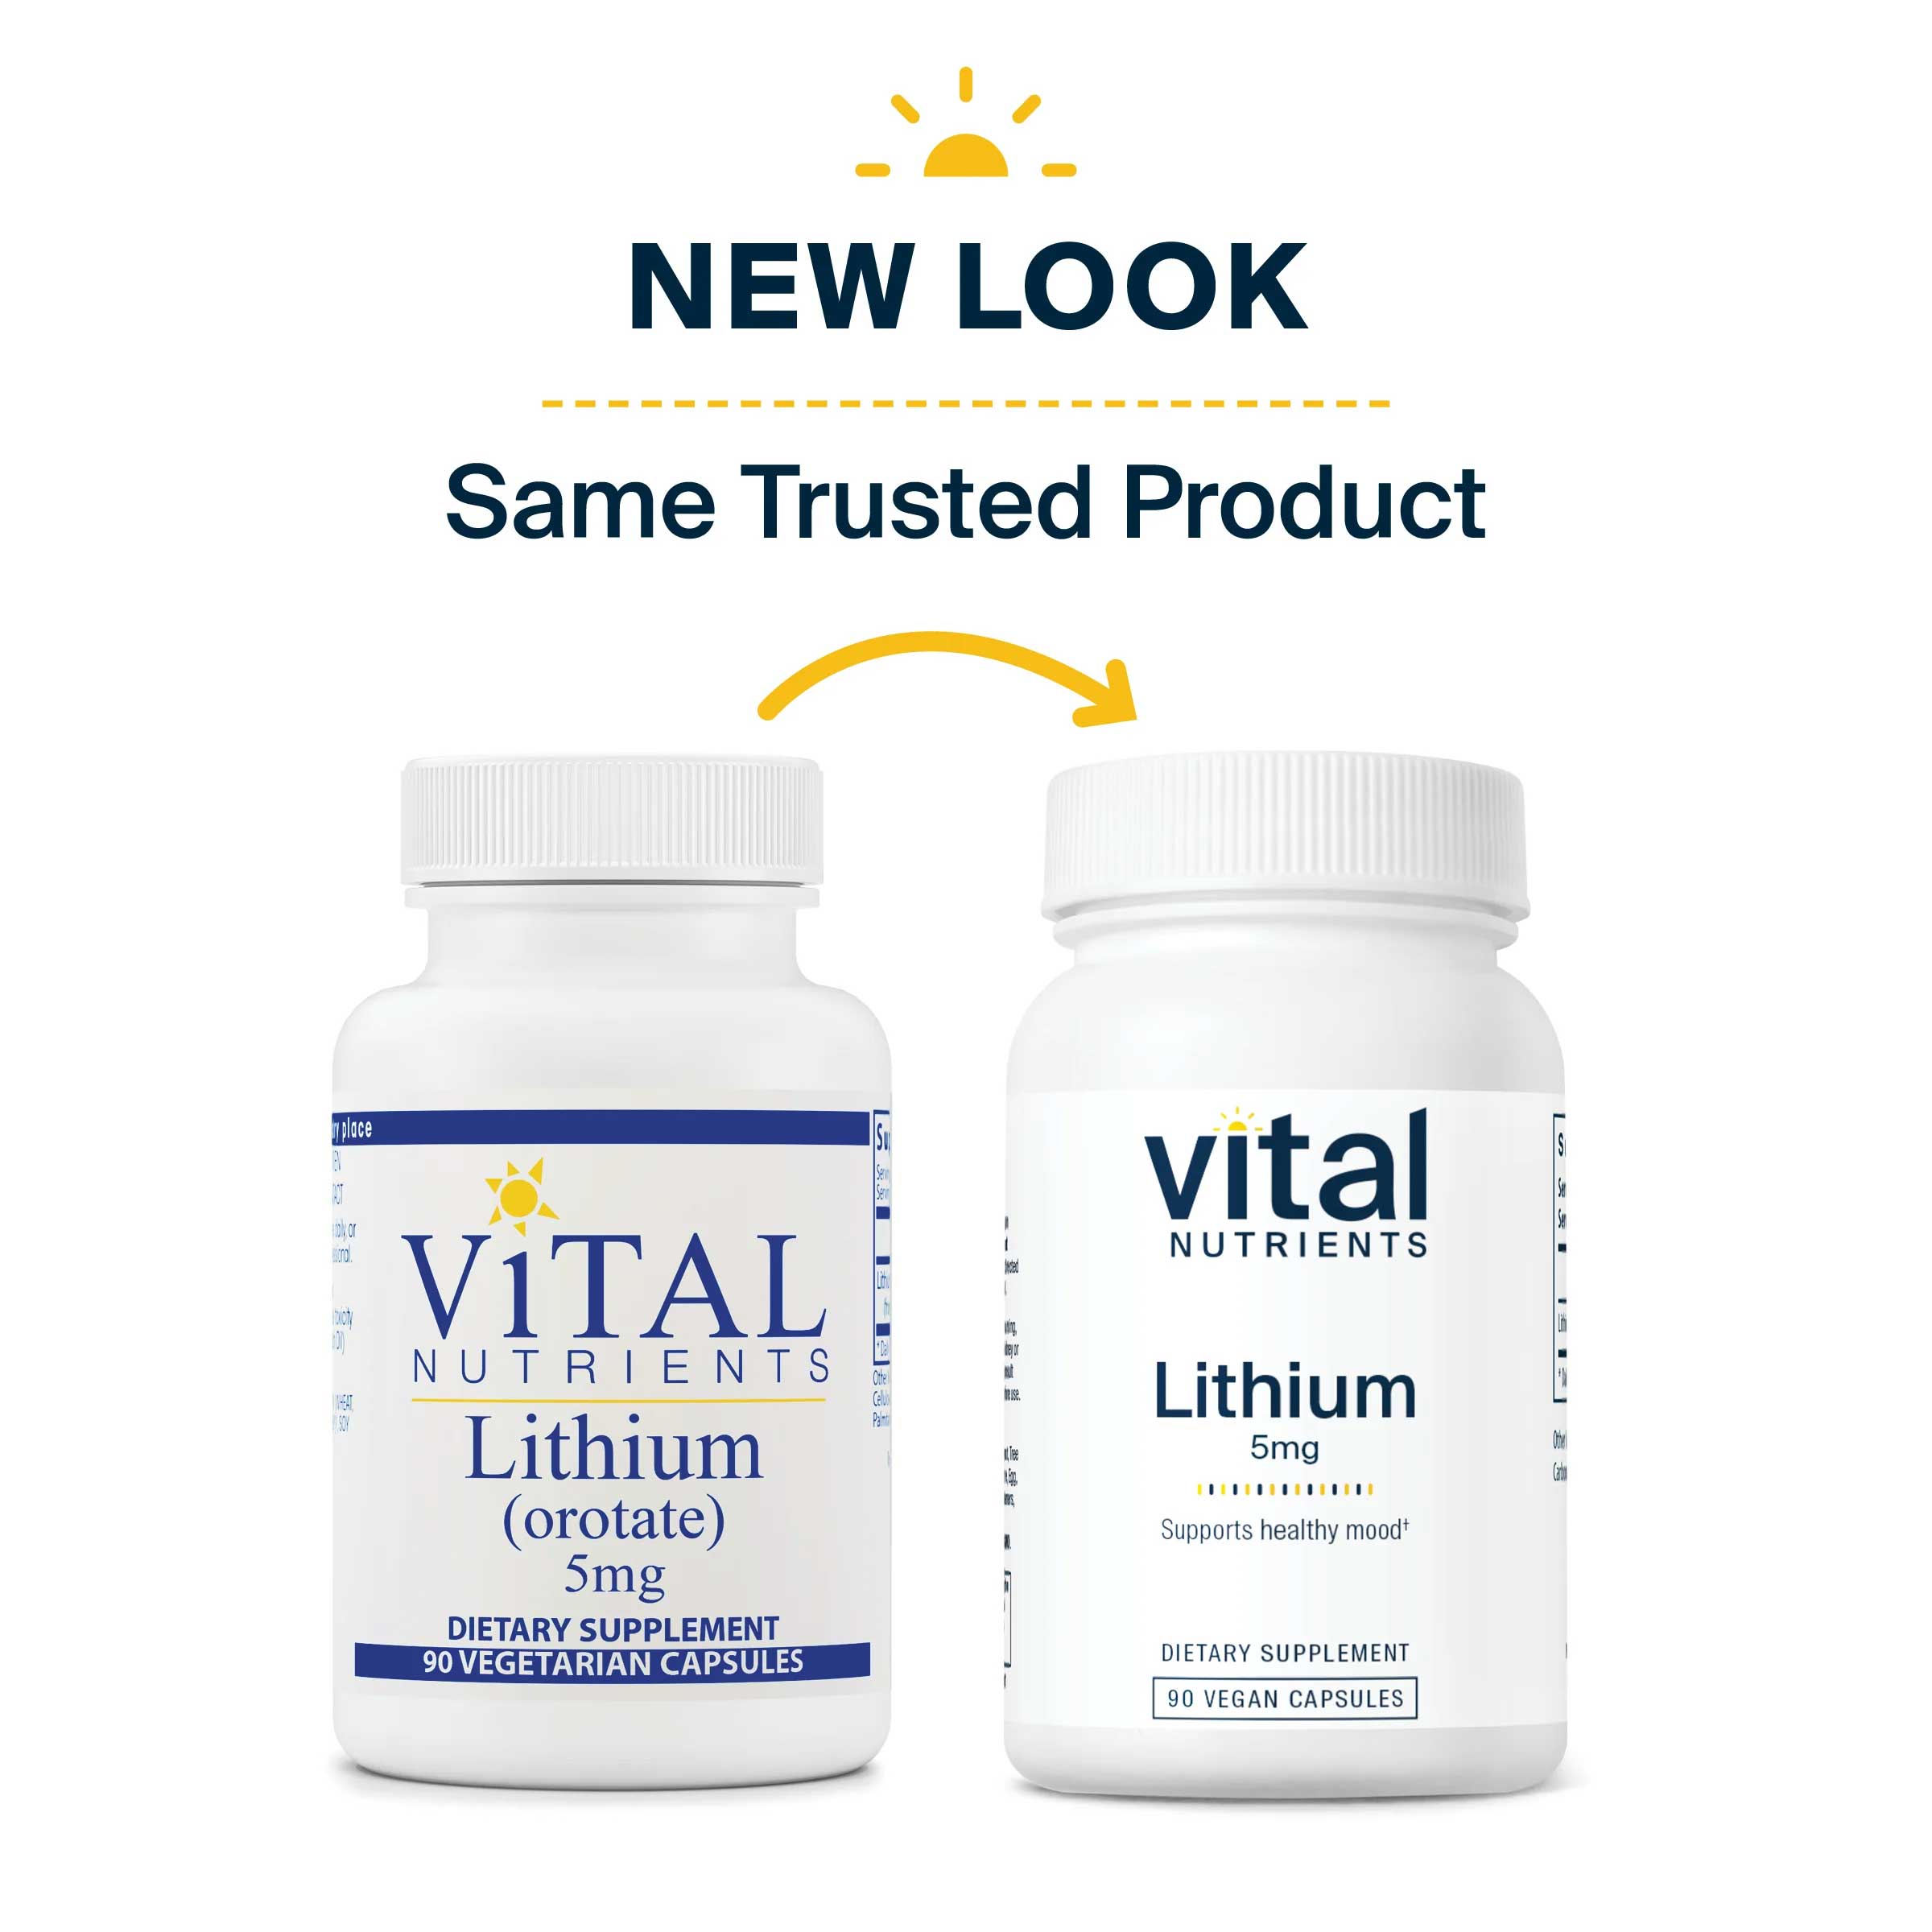 Vital Nutrients Lithium (orotate) 5mg New Look